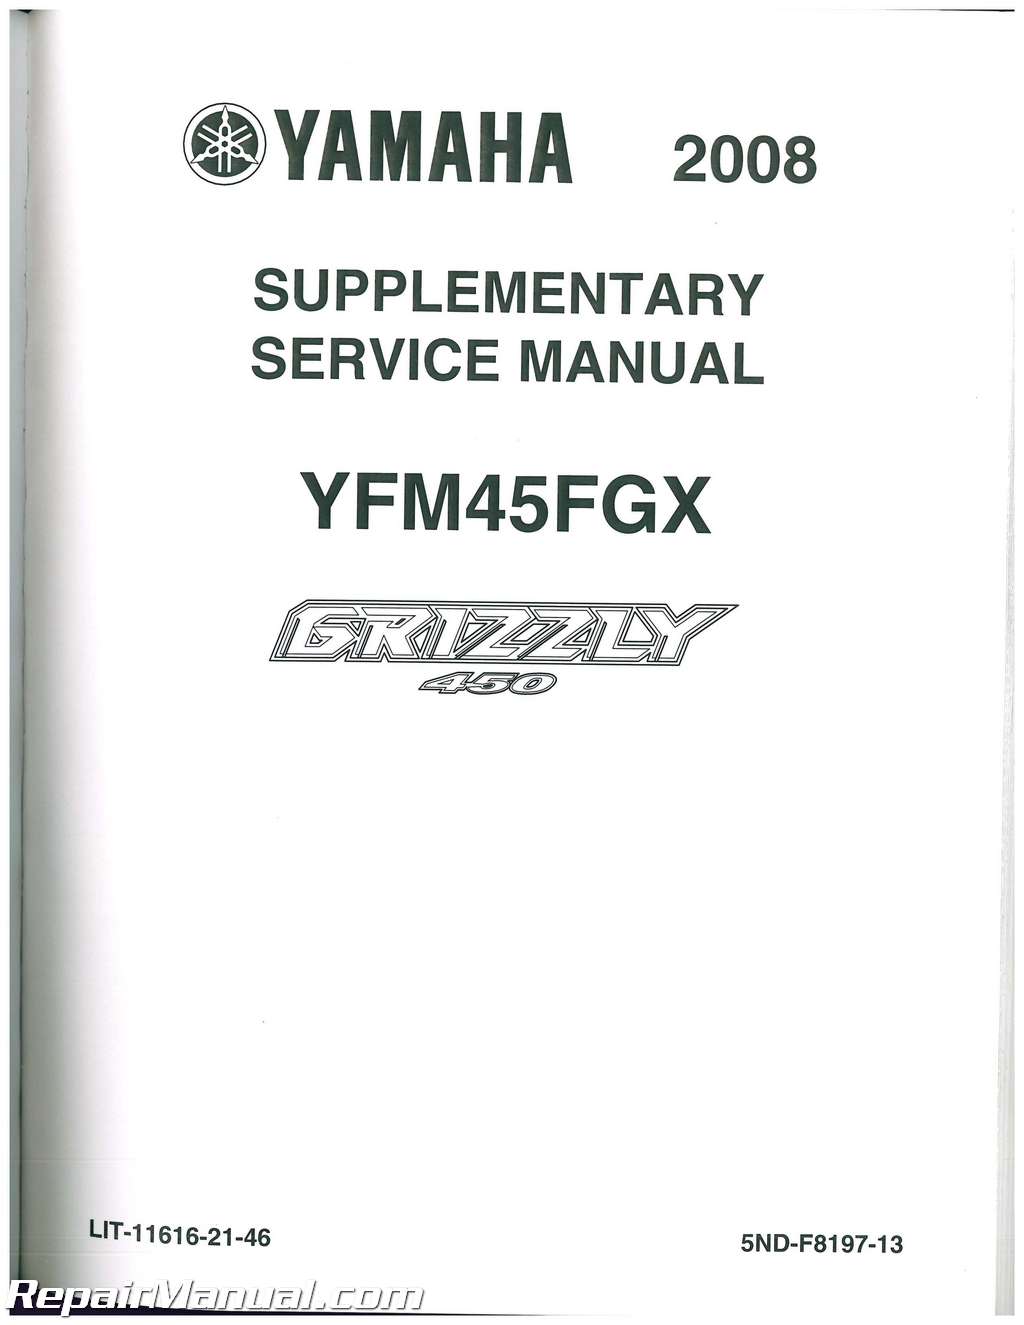 Yamaha Kodiak 450 Fuse Box Location - Wiring Diagram Schemas